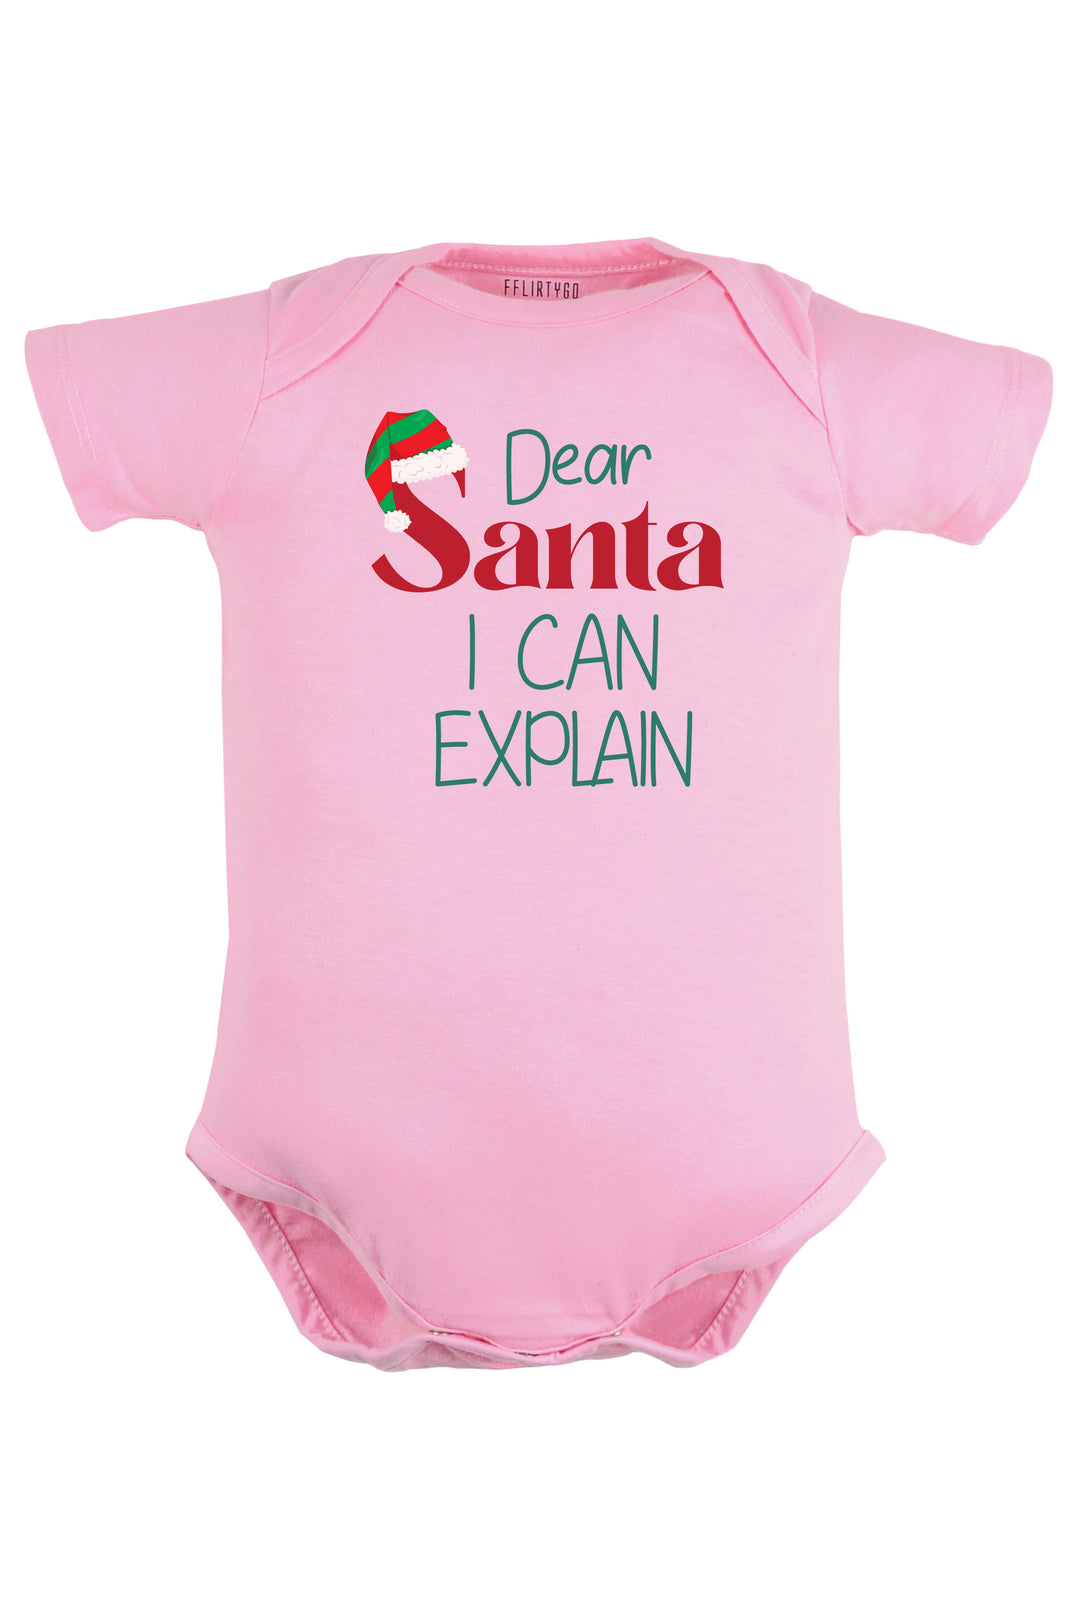 Dear Santa I Can Explain Baby Romper | Onesies